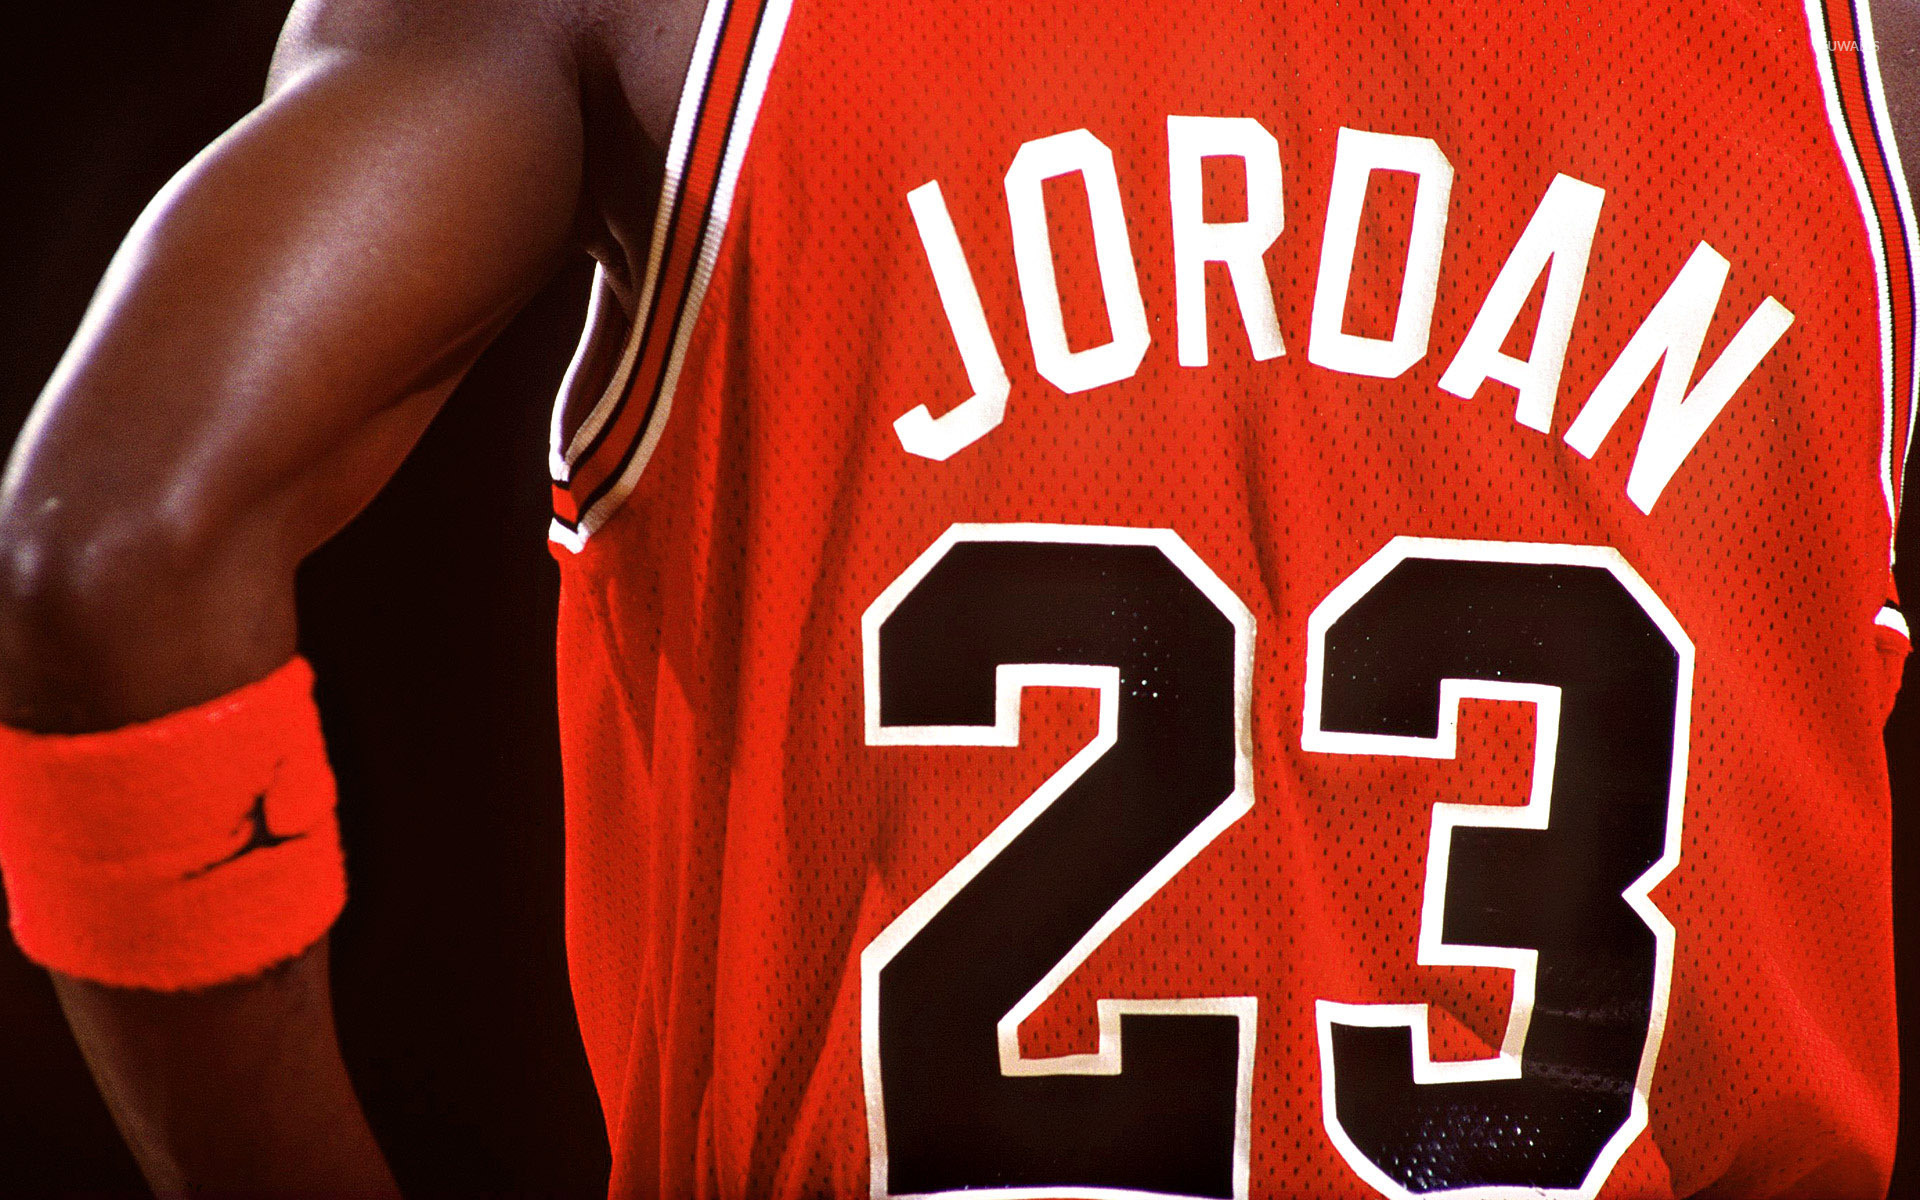 Jordan Mj Sports Widescreen On The Desktop Pictures 3d Wallpaper